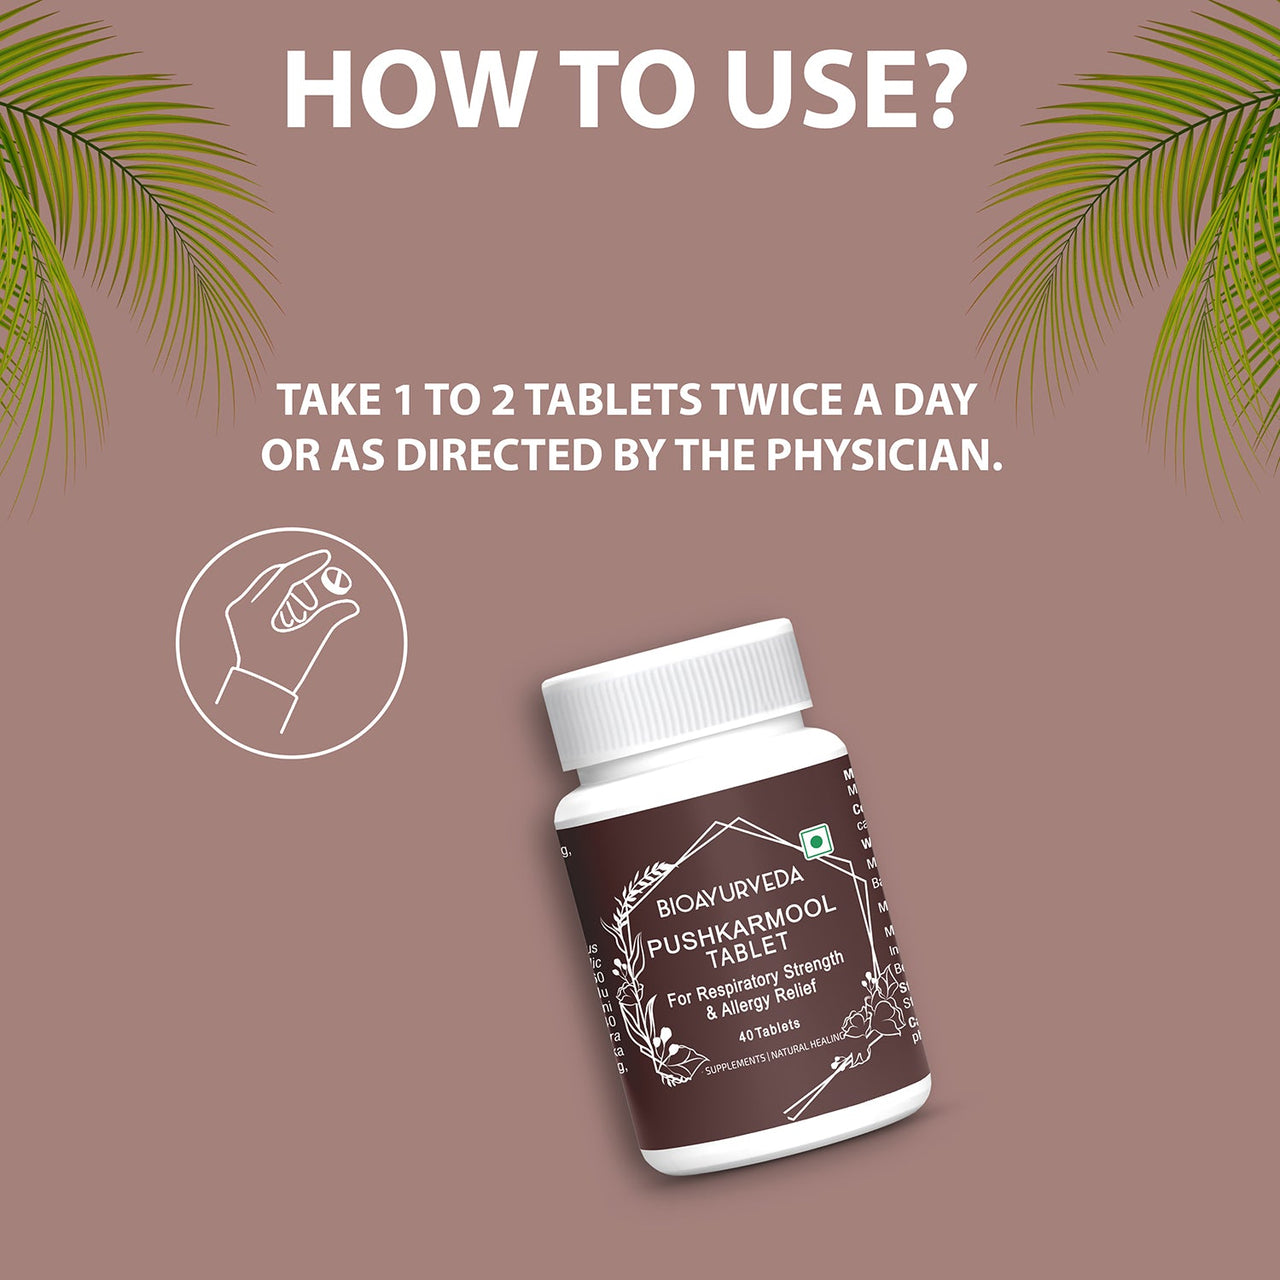 How to Use Pushkarmool Tablet 40